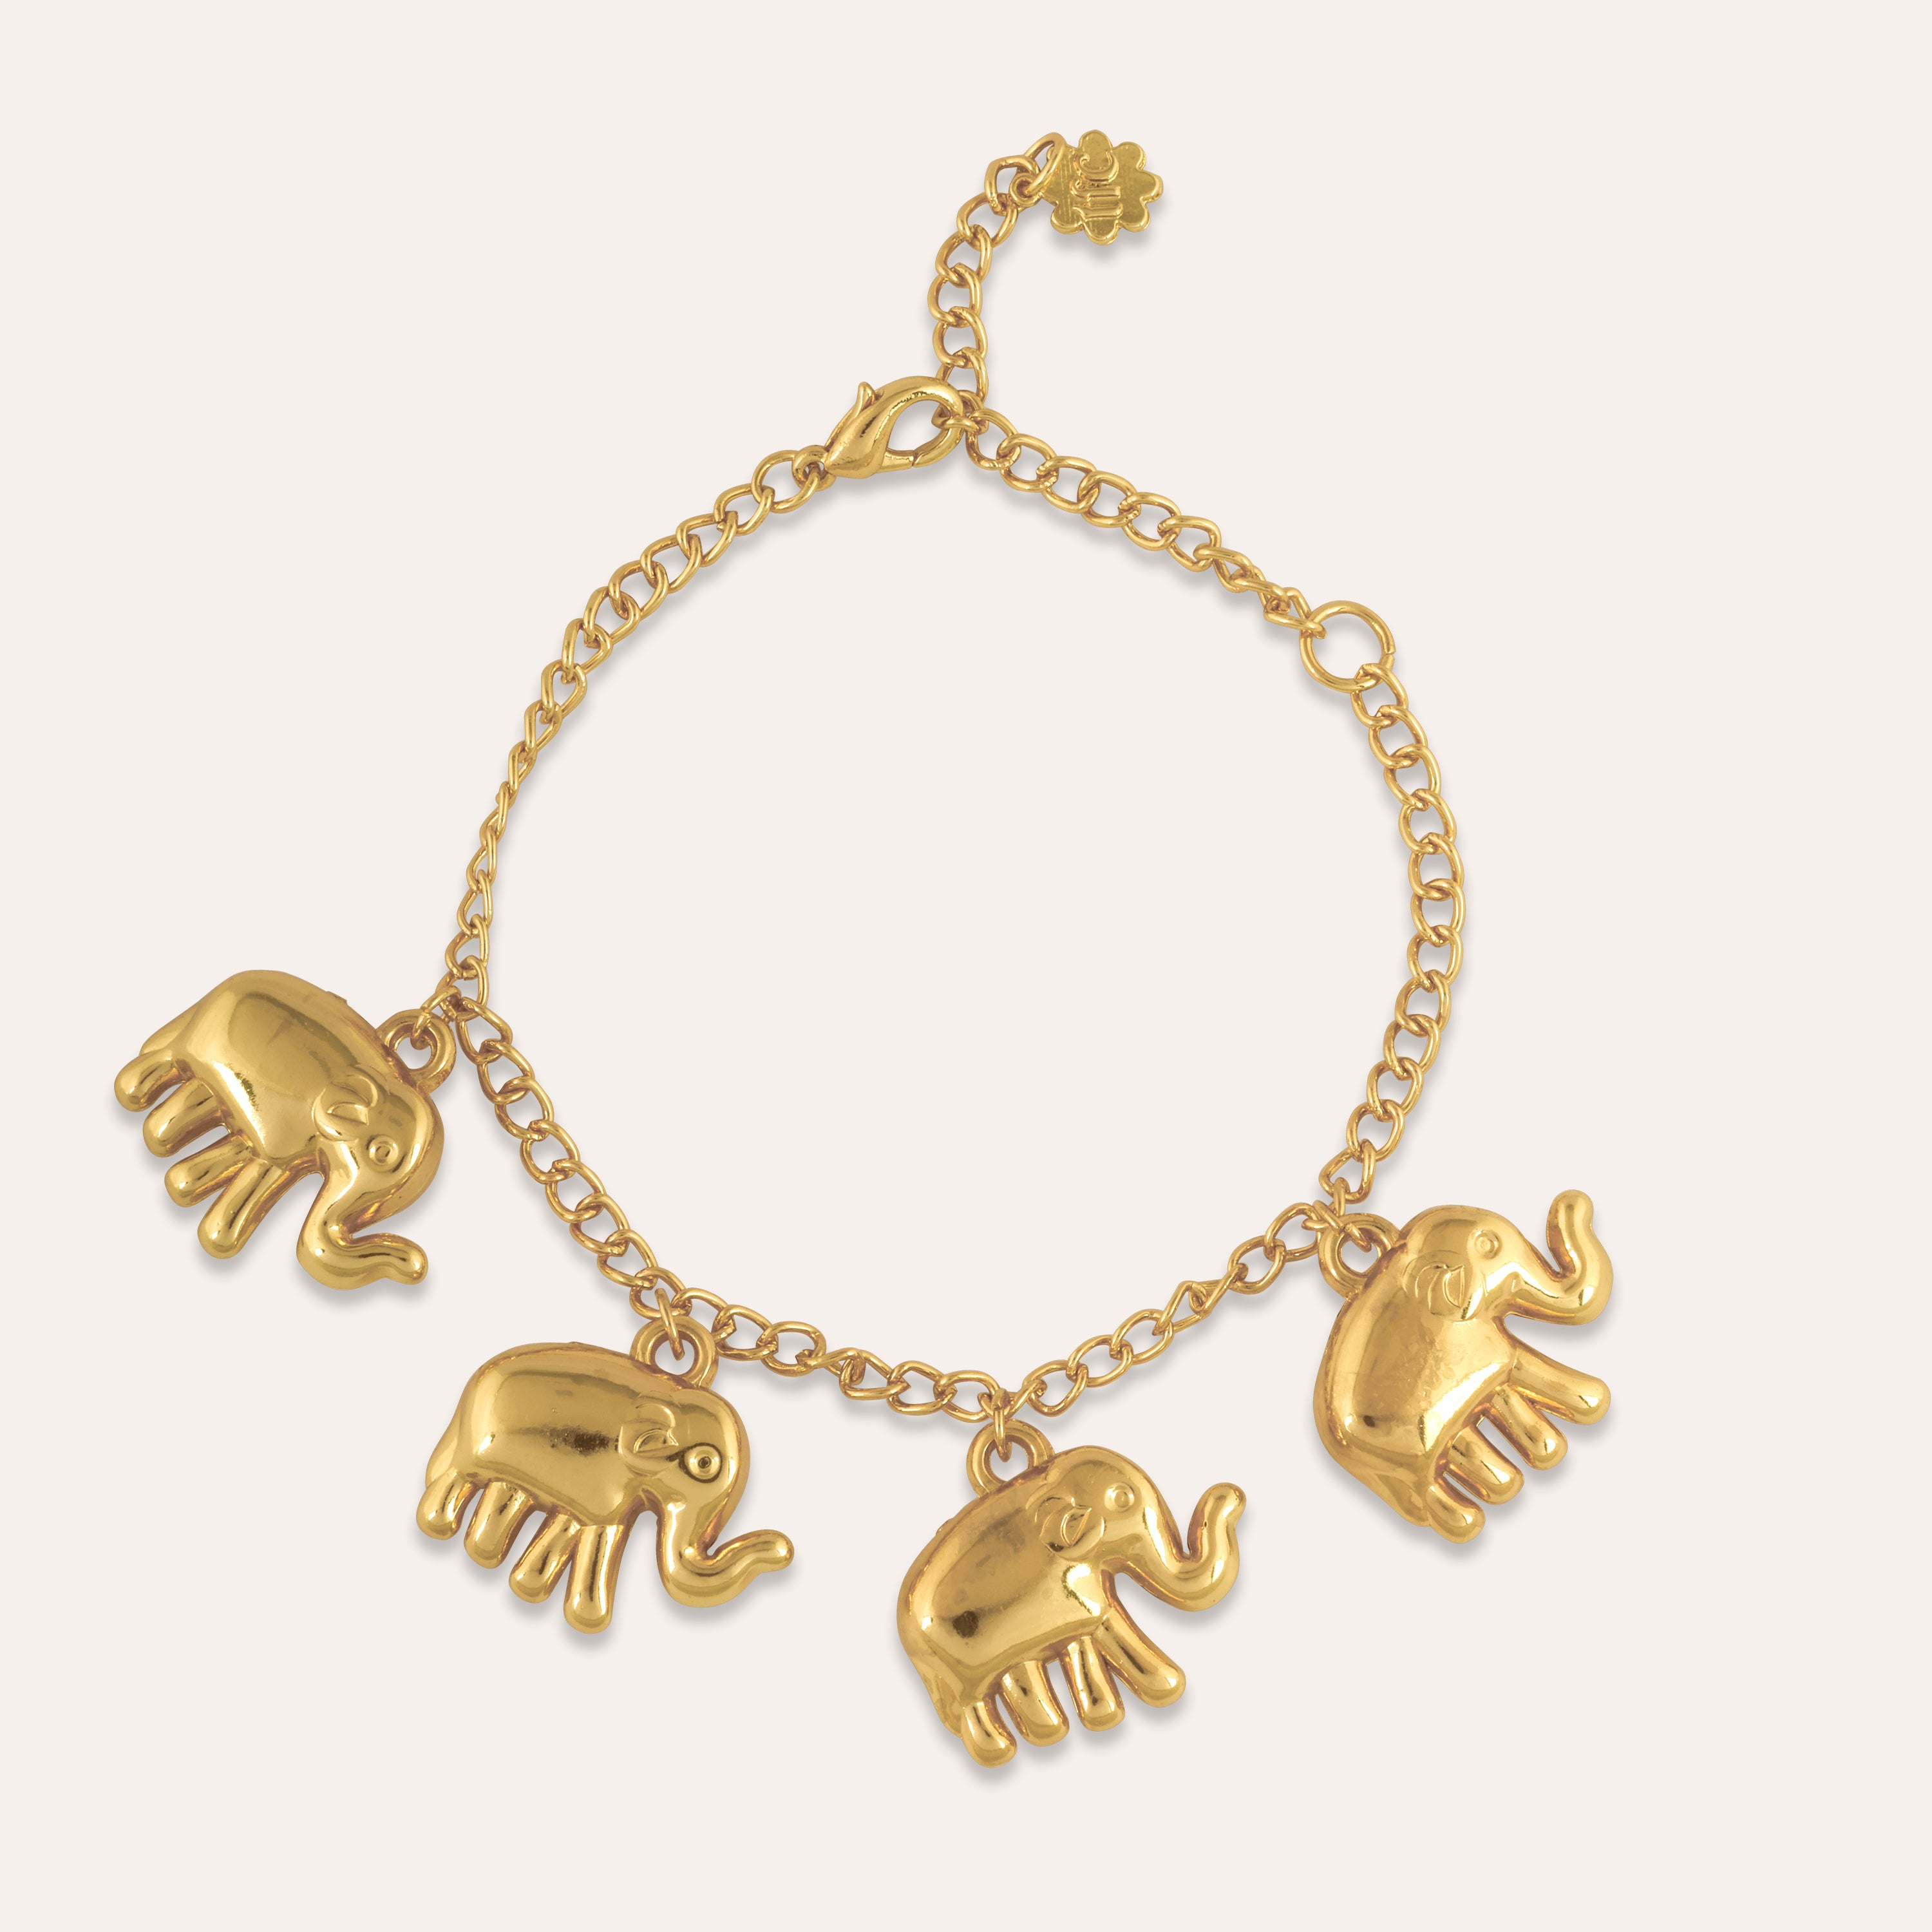 Buy Elephant Bracelet, Diamond Elephant Bracelet in 14k Gold, Gold Bracelet,  Baby Elephant Bracelet, Tiny Lucky Charm Bracelet, Animal Bracelet Online  in India - Etsy